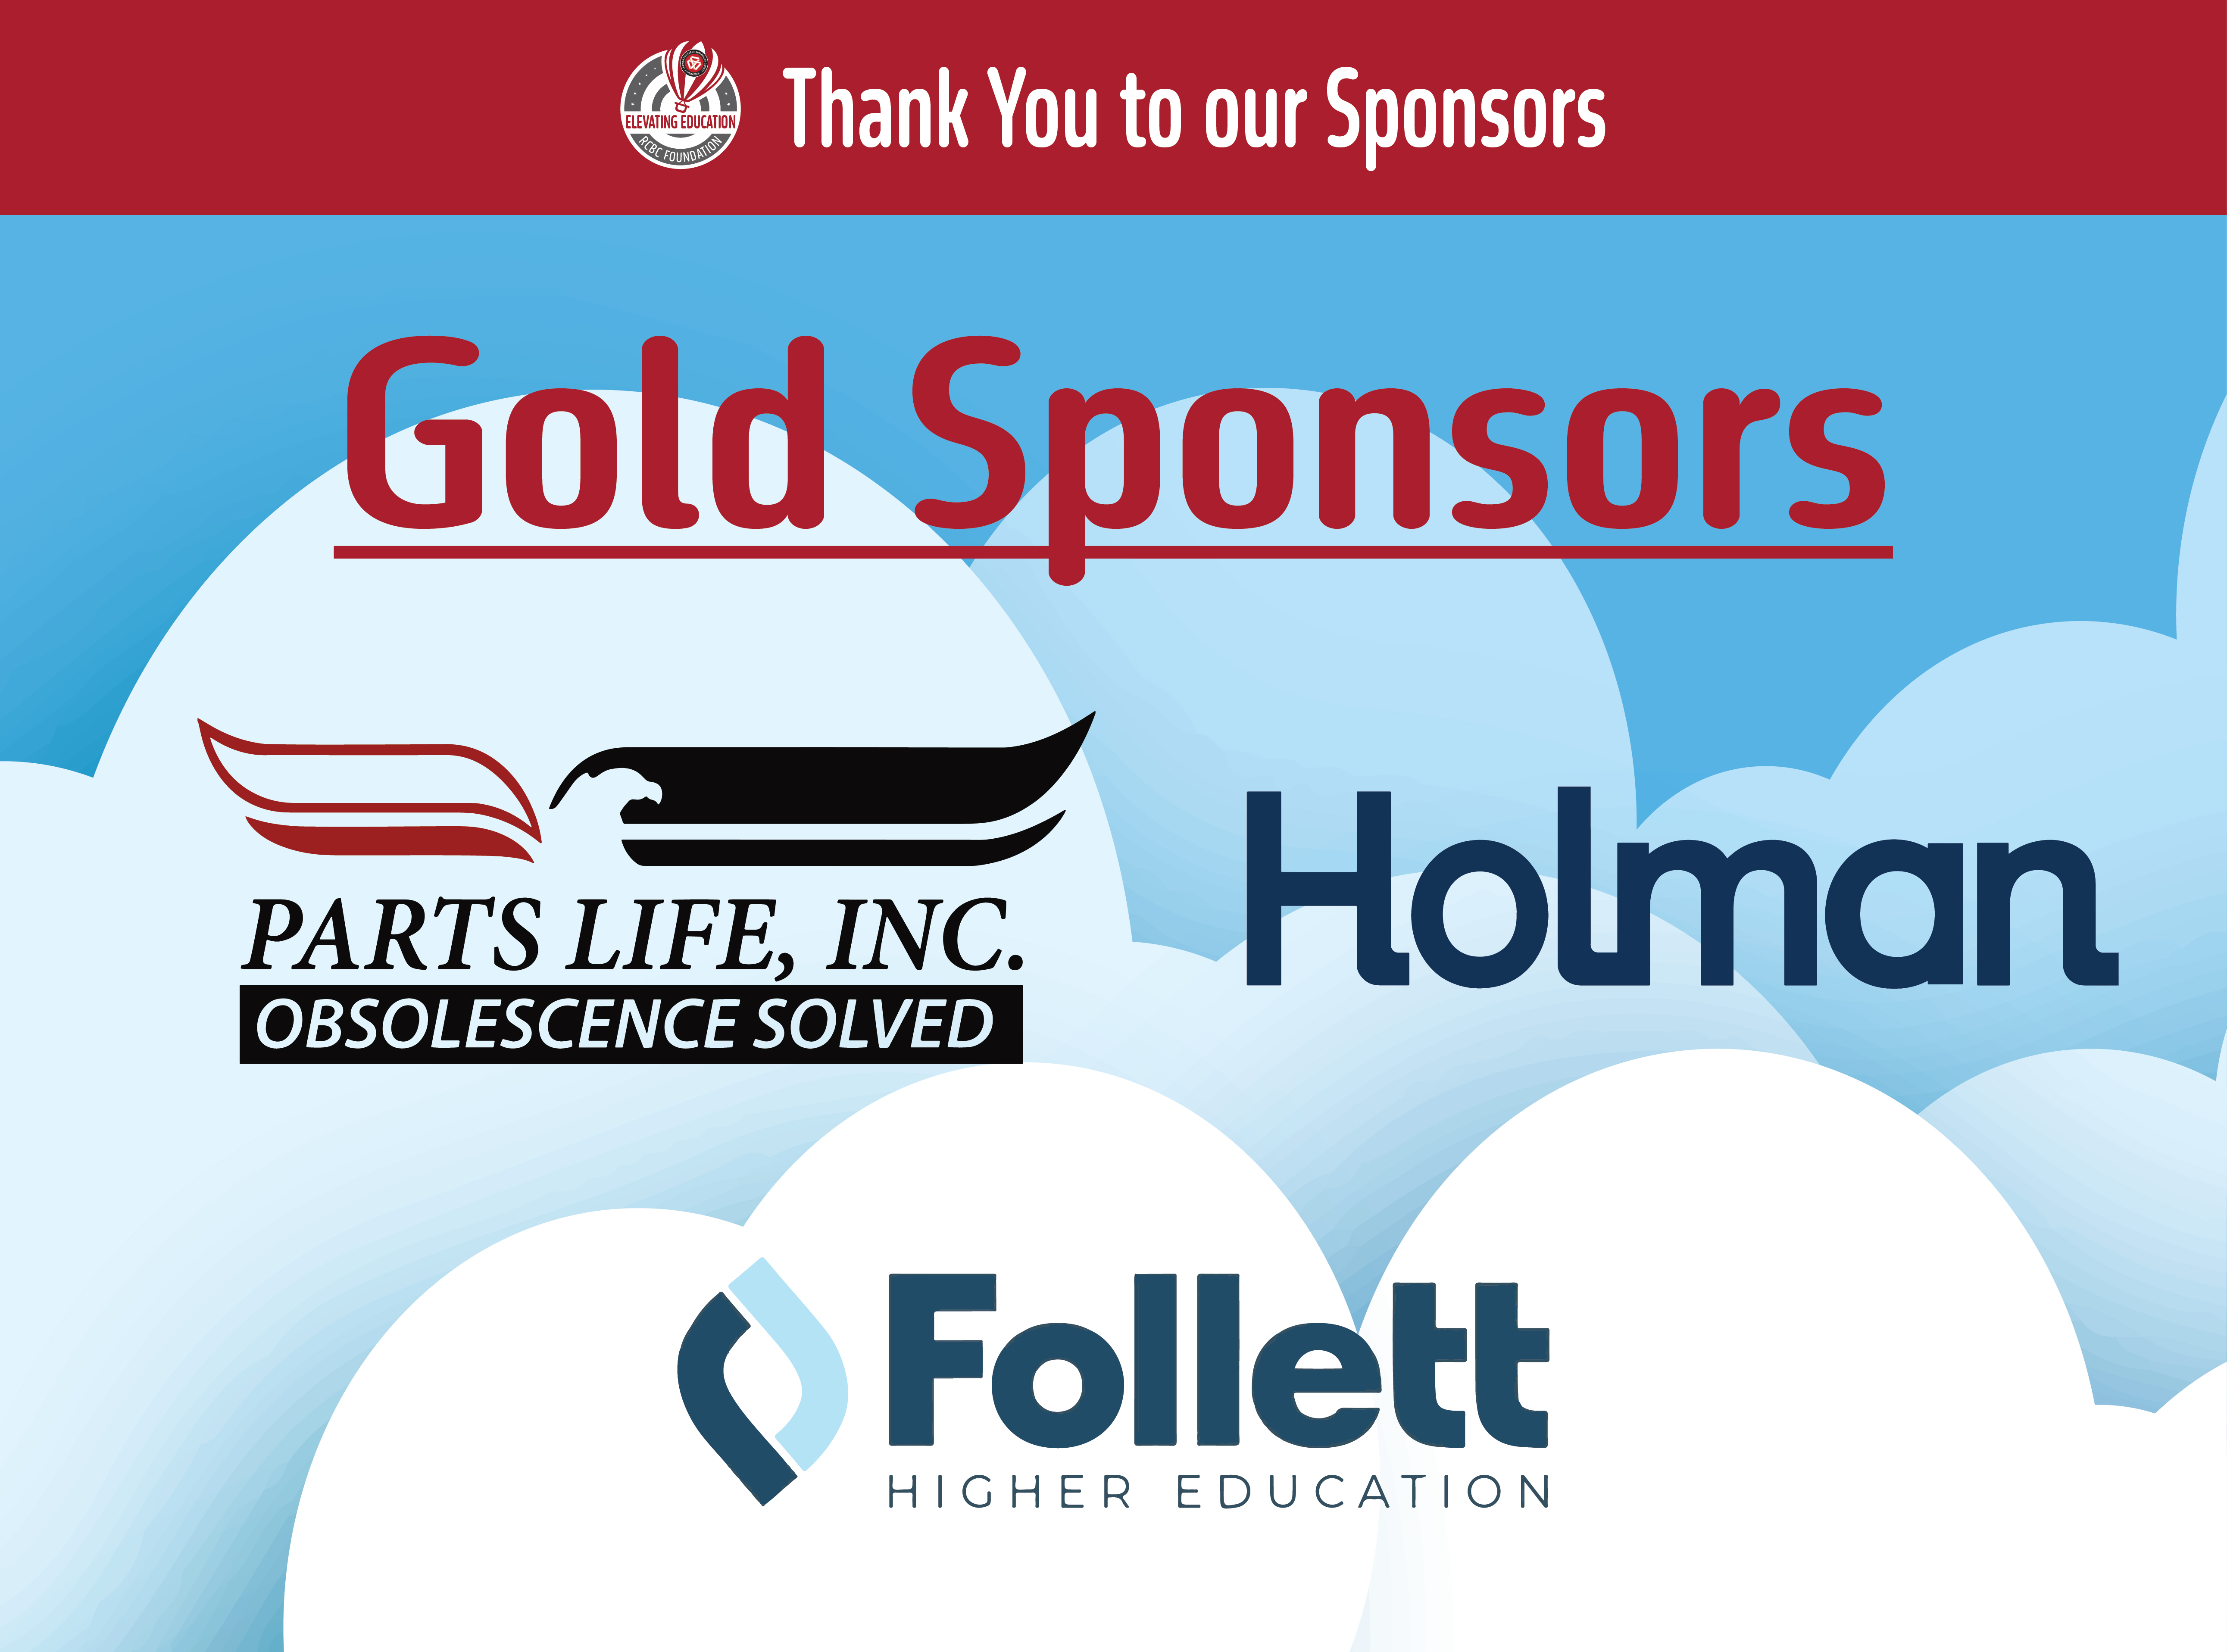 Gold sponsorship thanking sponsors: parts life, holman and follett higher education